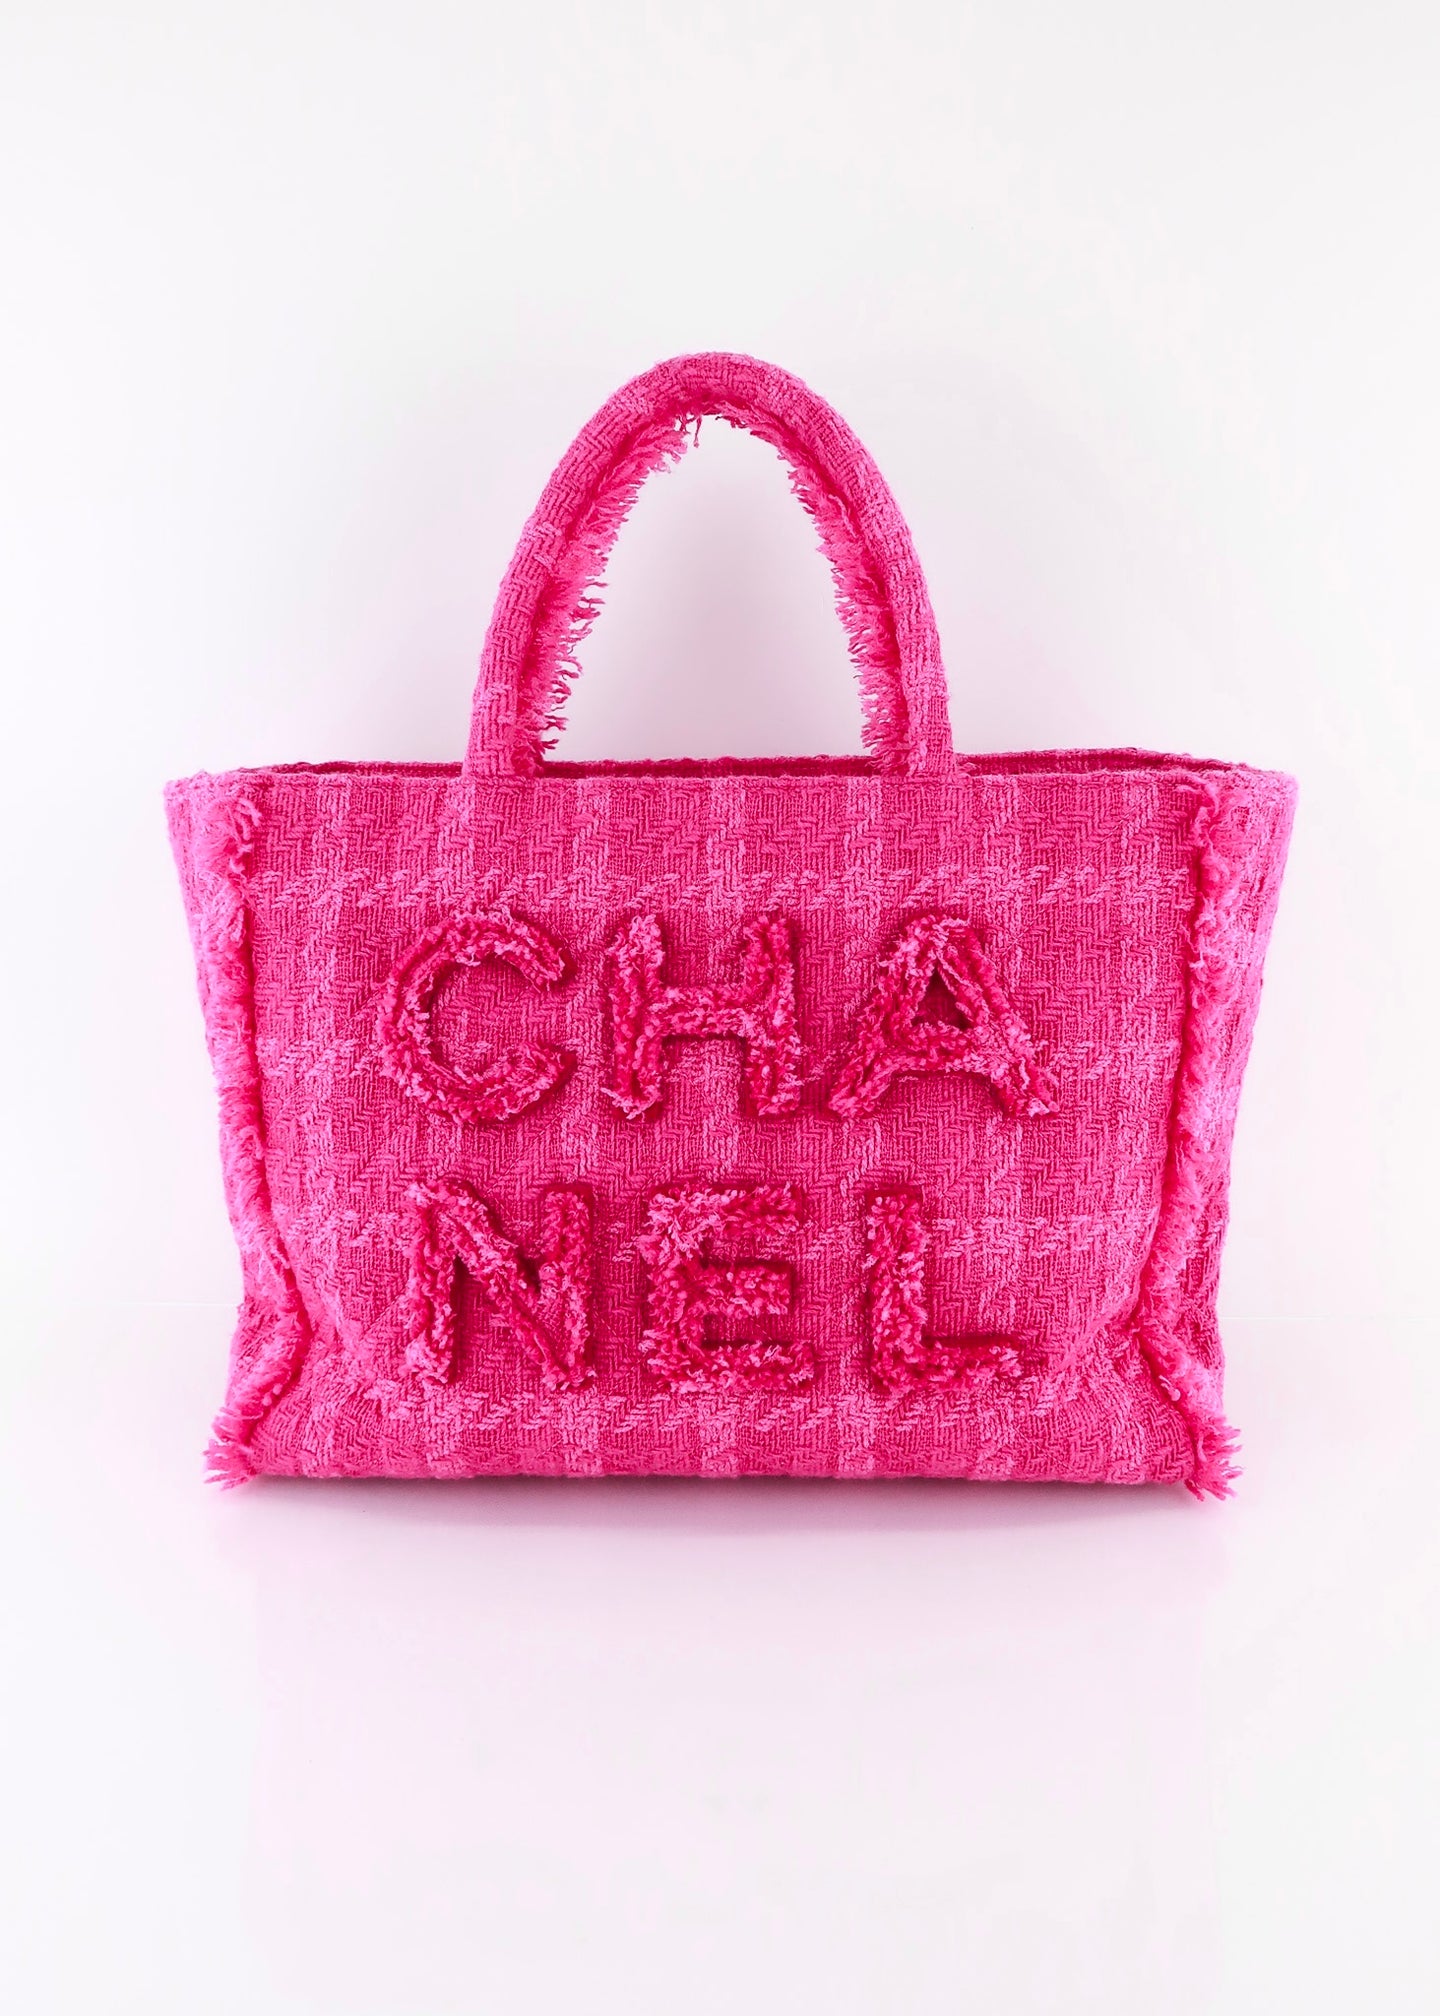 chanel large shopper tote bag